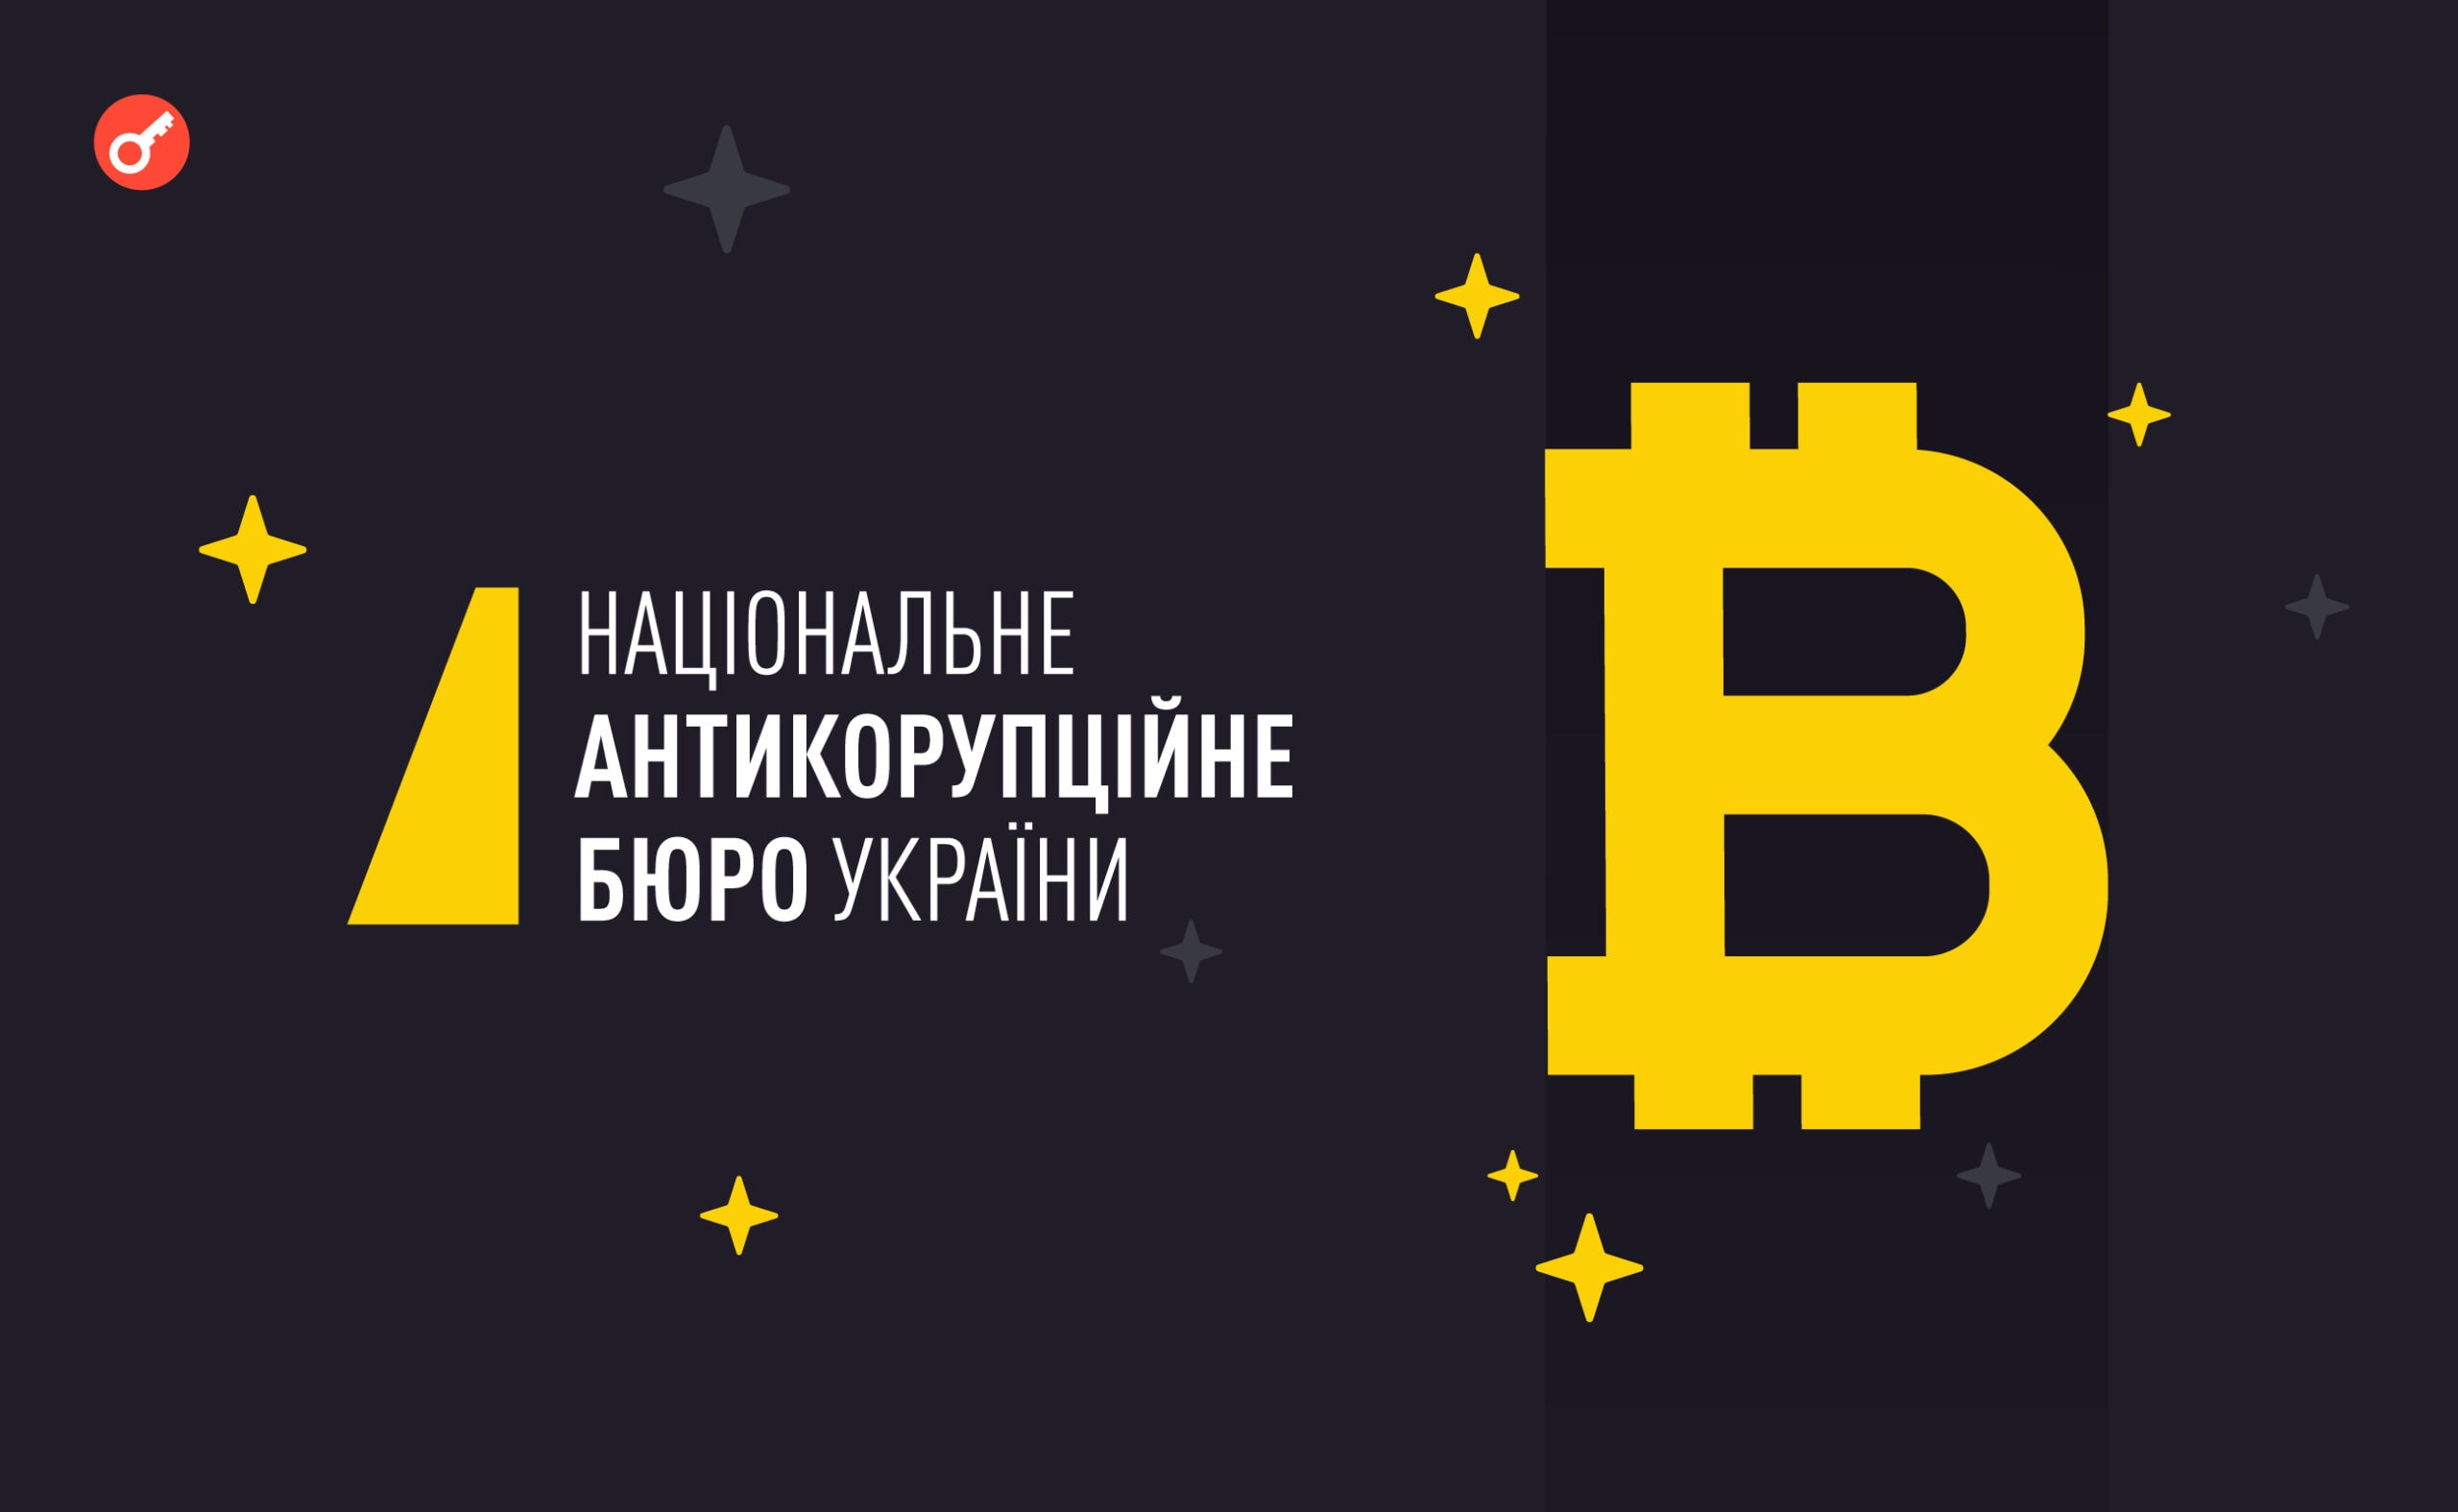 В ексглави Держспецзв’язку України виявили криптоактиви майже на $1,5 млн. Головний колаж новини.